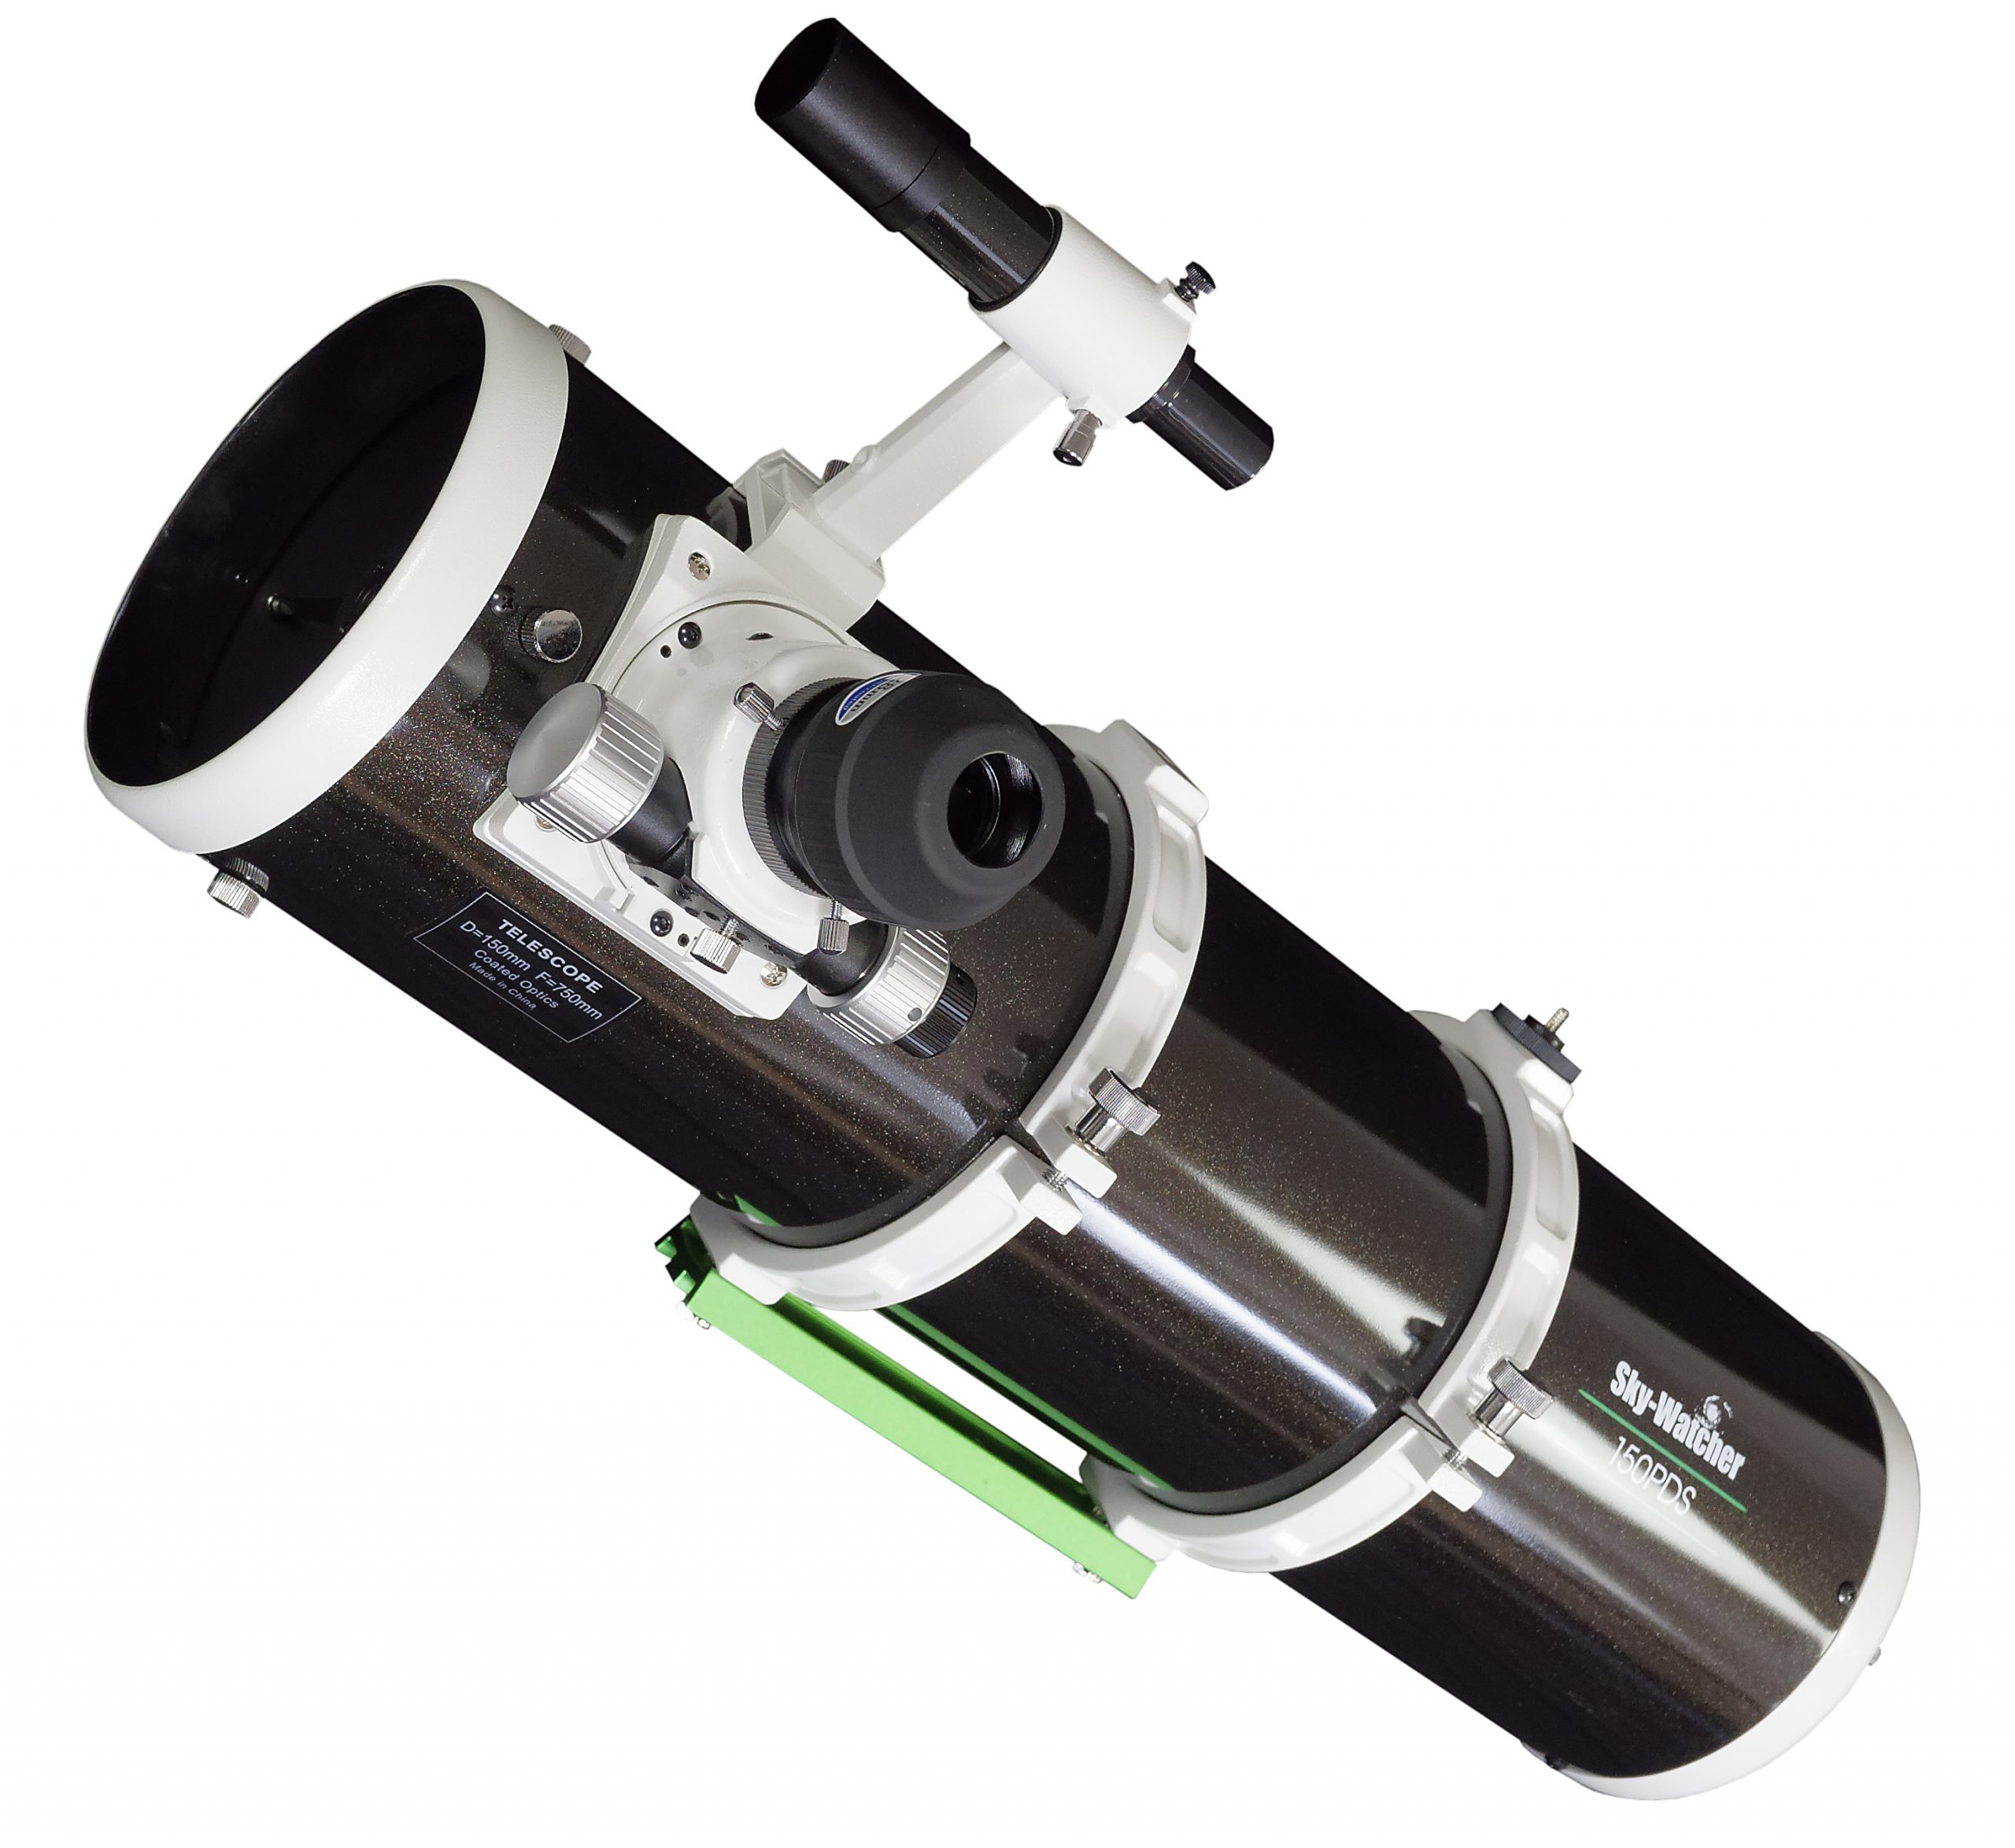   Tubo ottico riflettore newton Black Diamond 150/750 + AE Collimation tool Easy Sky Watcher  